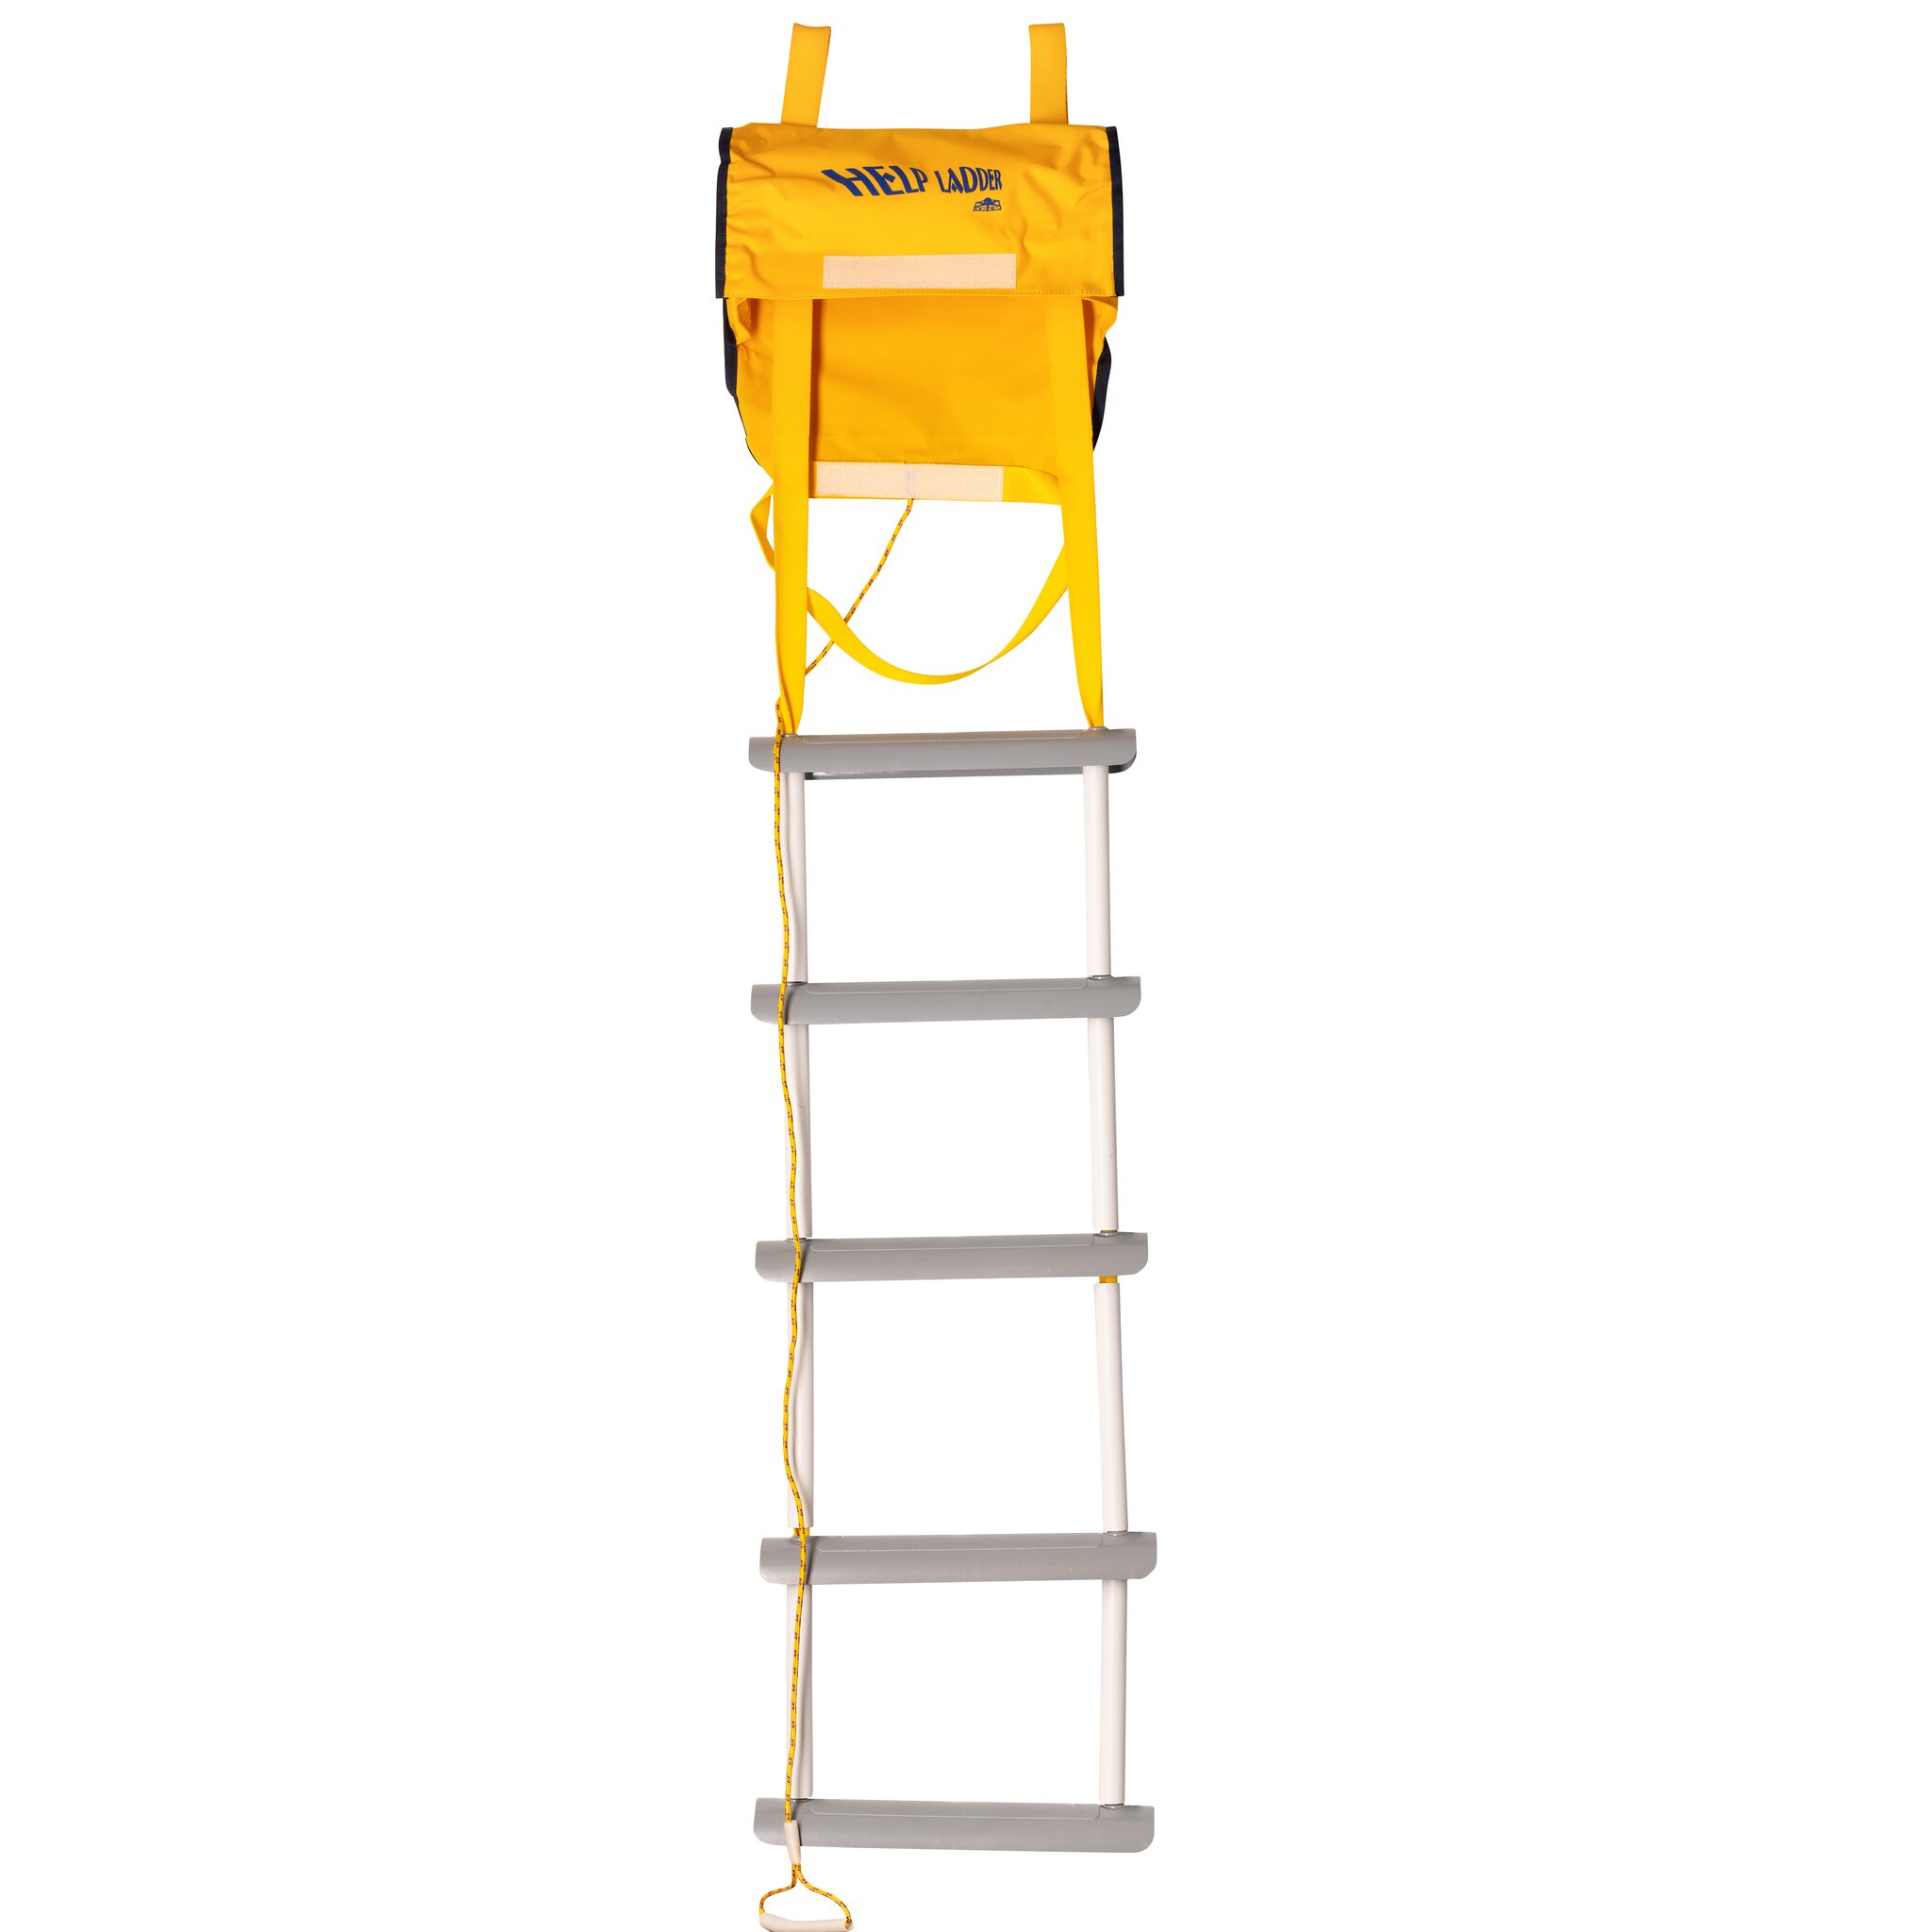 Rescue ladder - 5 steps